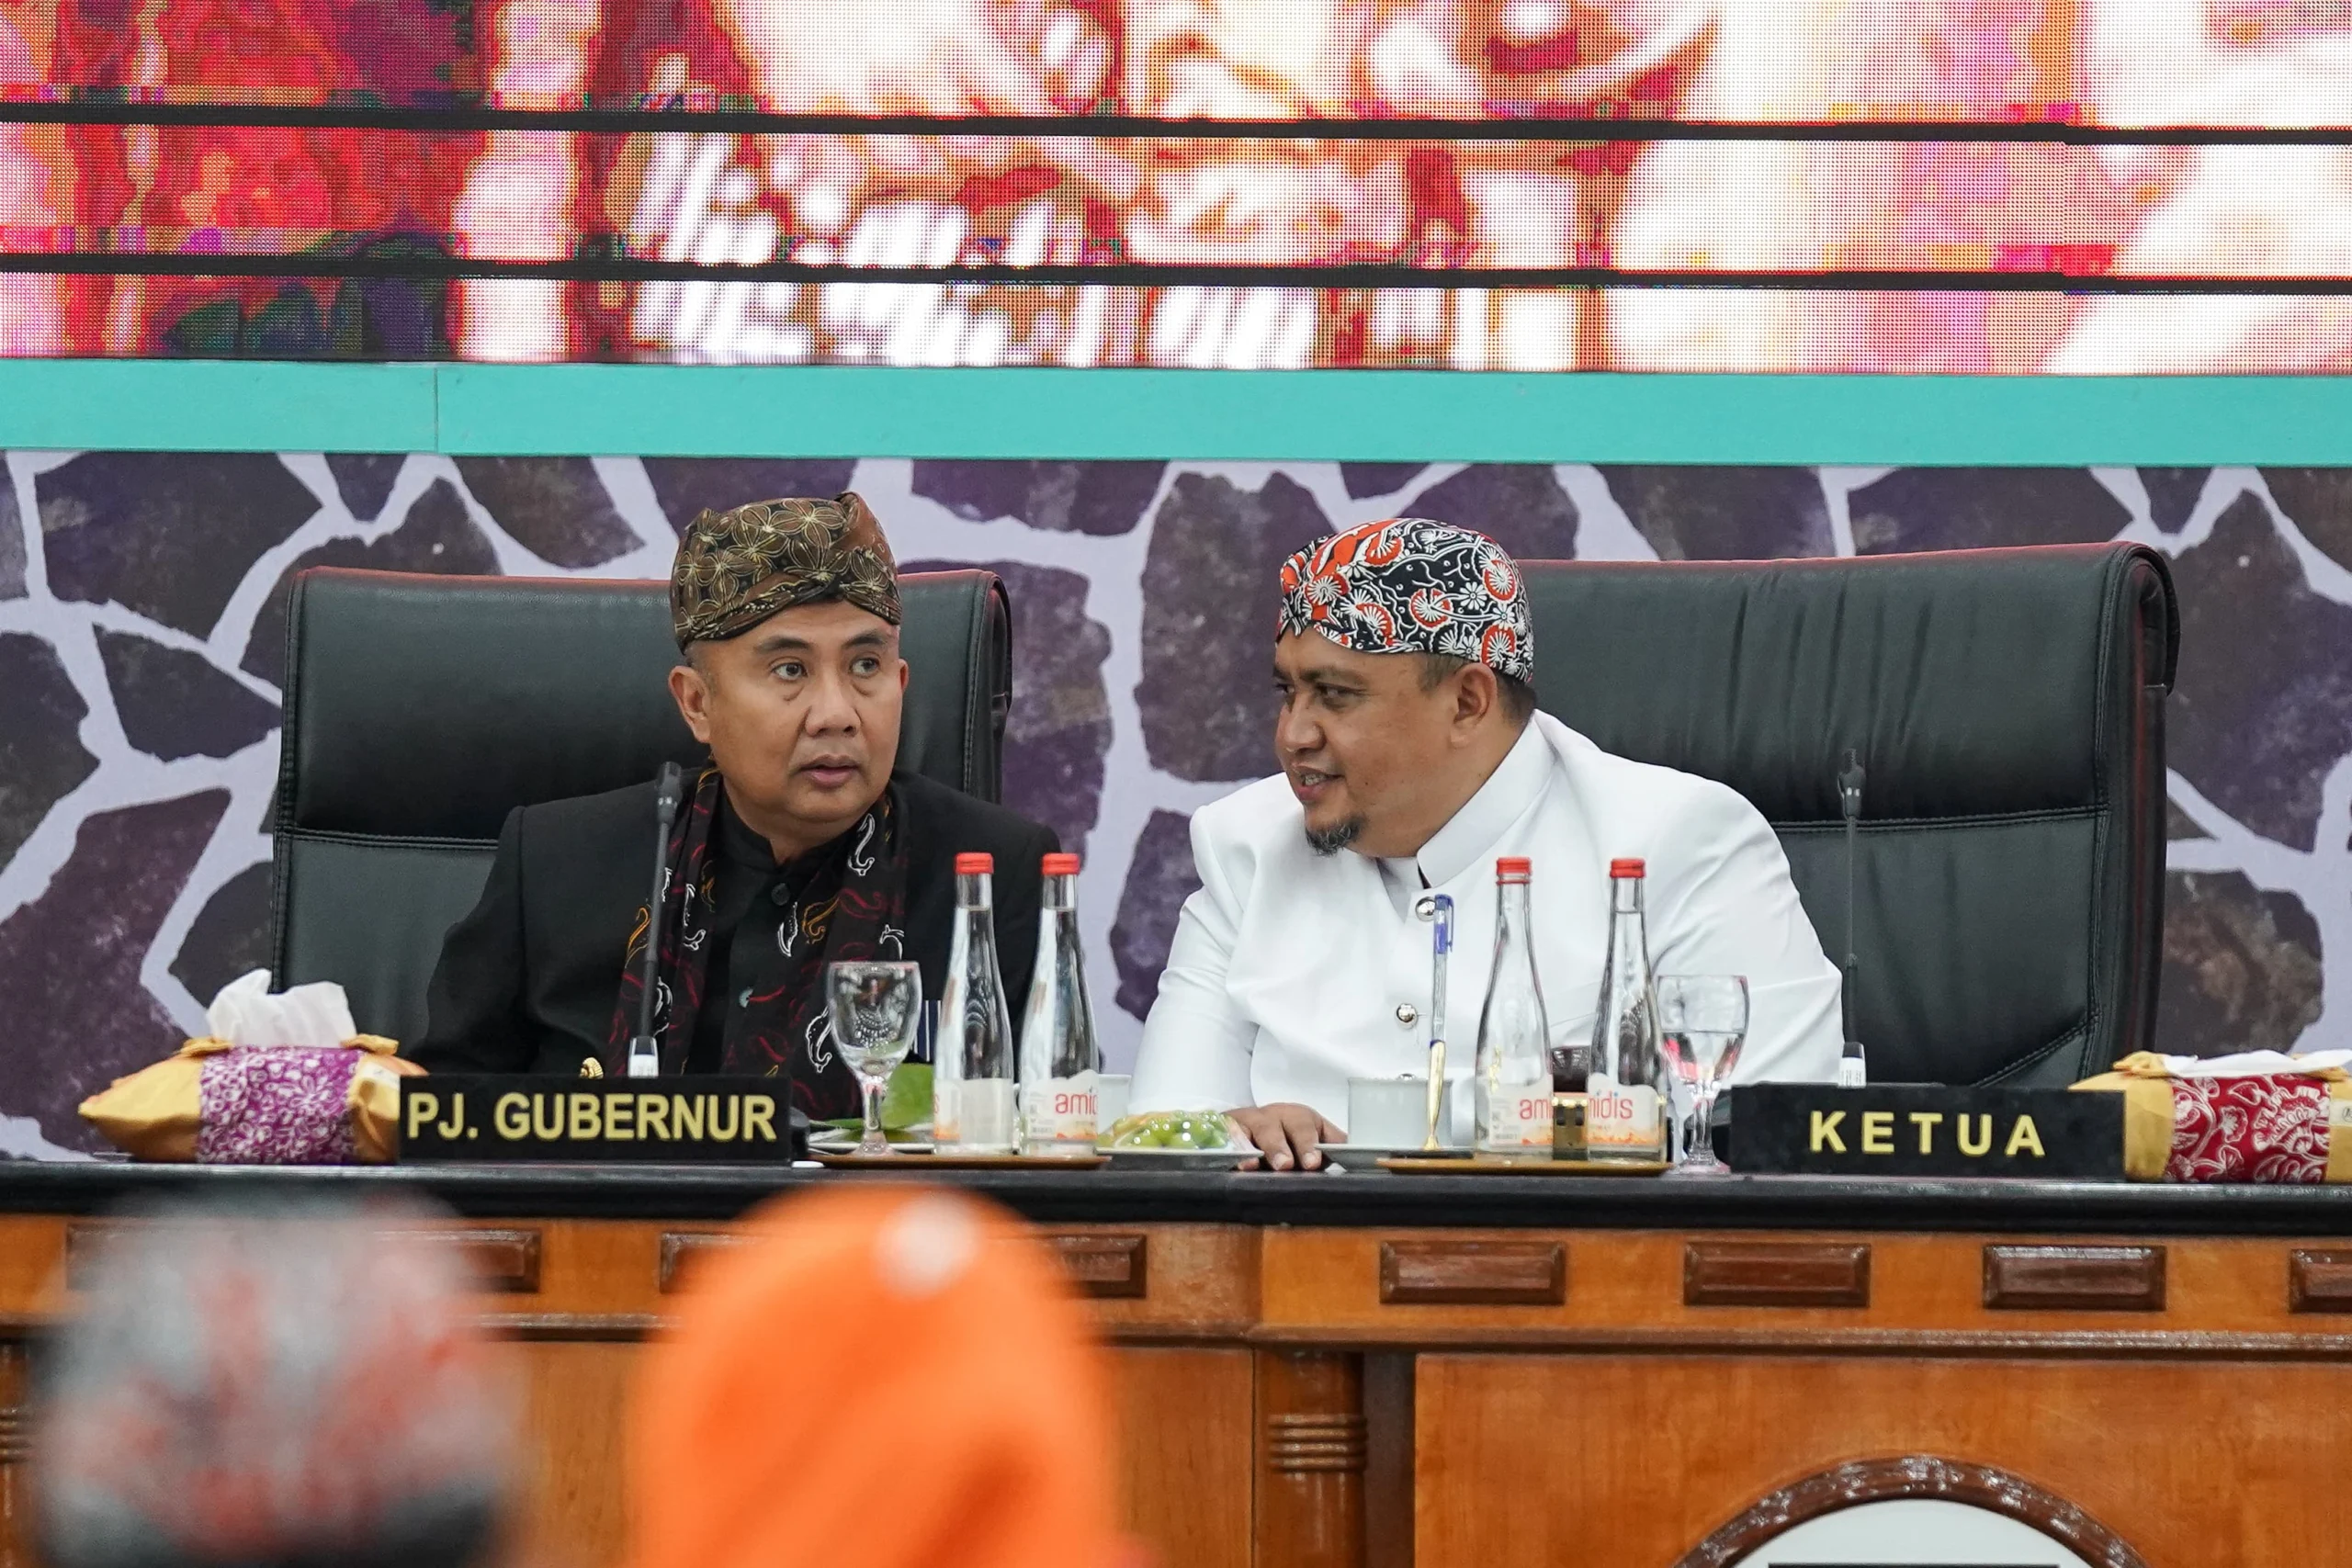 Ketua DPRD Kota Bogor, Atang Trisnanto bersama Pj Gubernur Jabar, Bey Machmudin. (Foto: Humpro DPRD Kota Bogor)